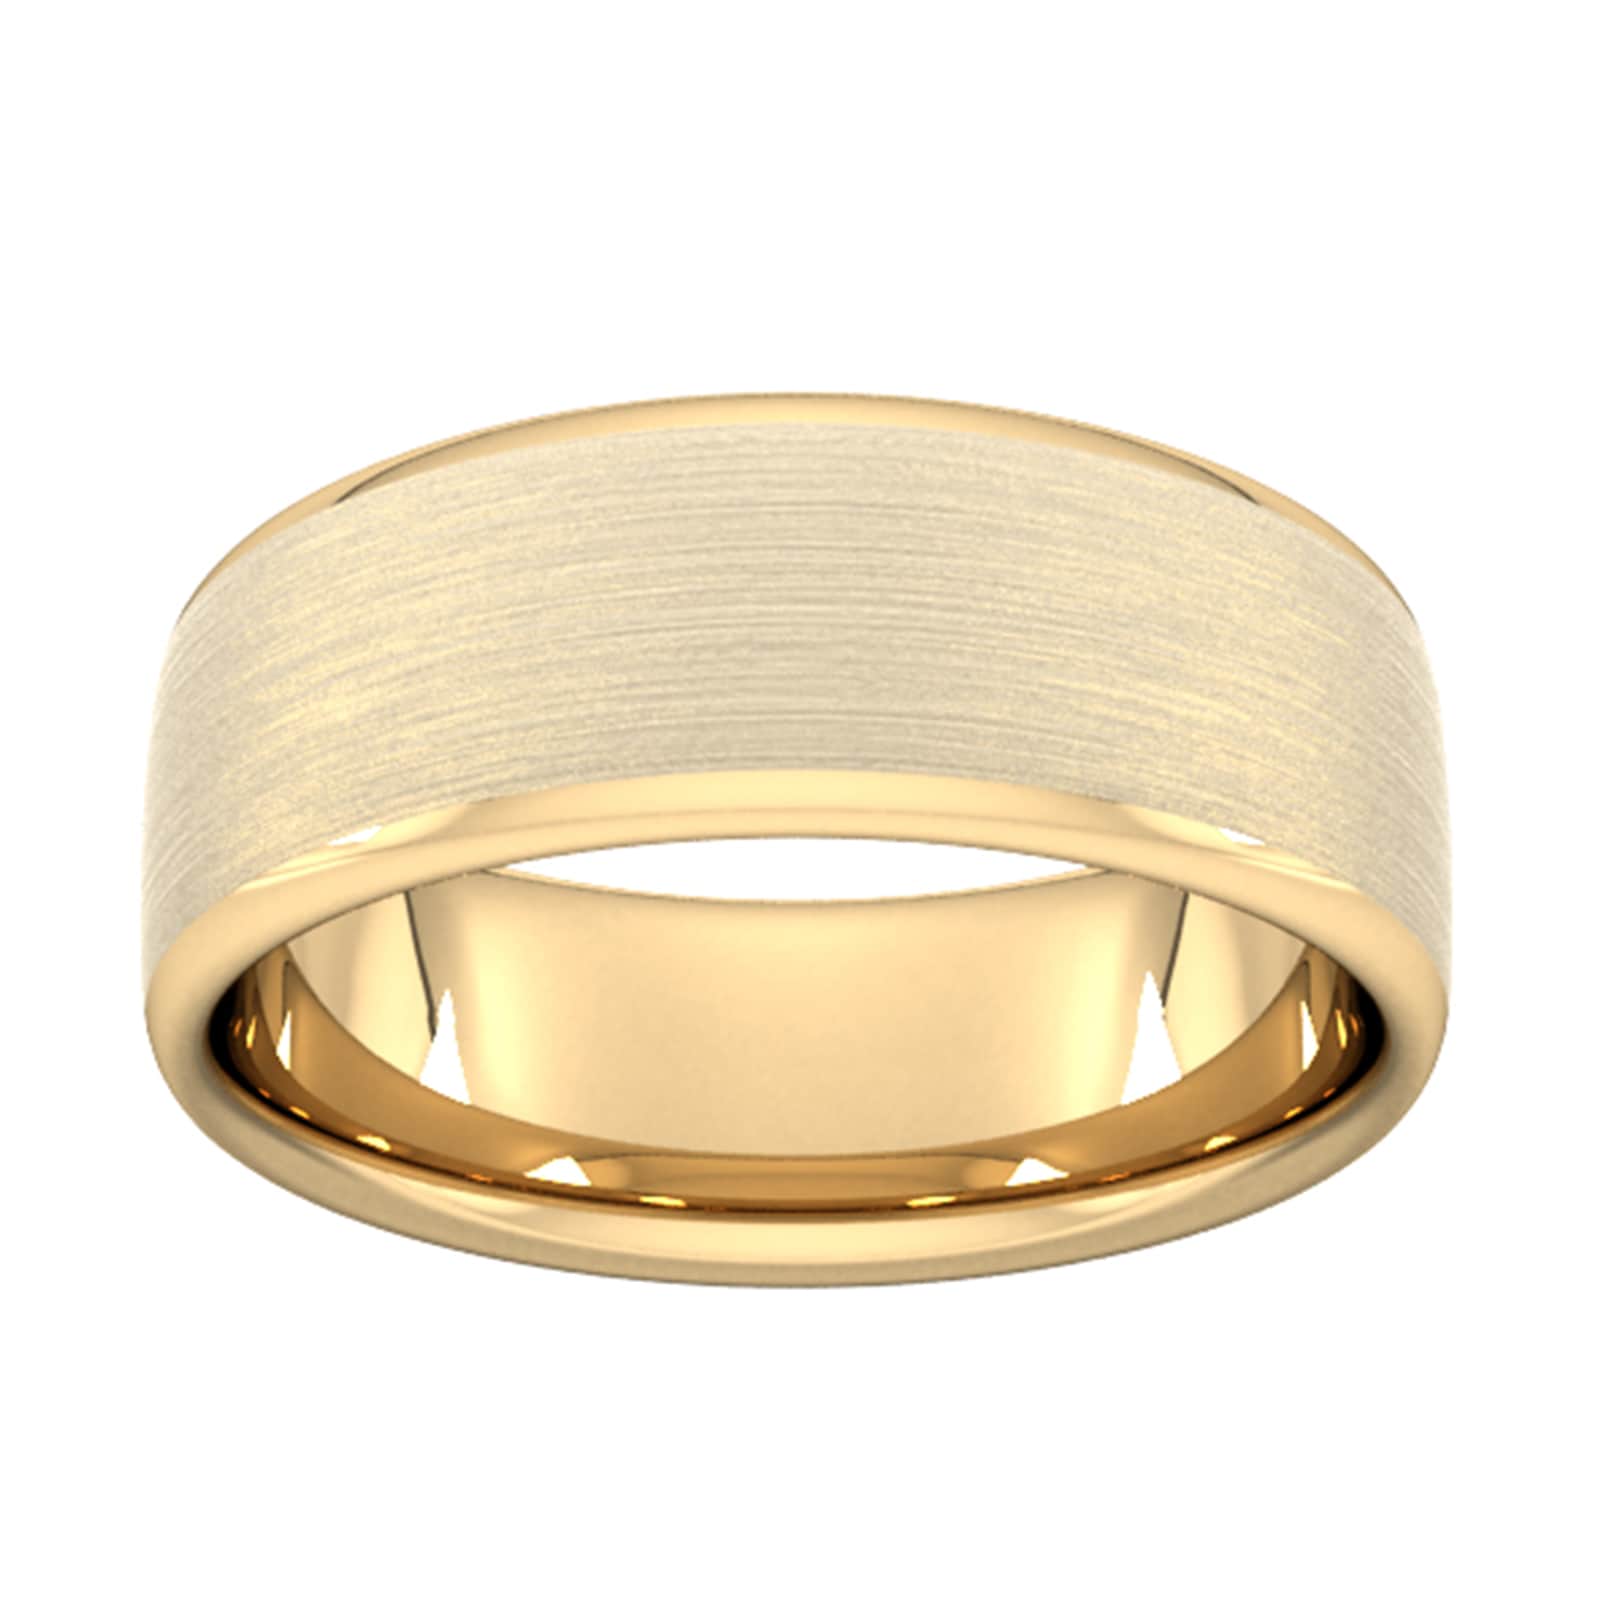 8mm D Shape Heavy Matt Finished Wedding Ring In 9 Carat Yellow Gold - Ring Size U